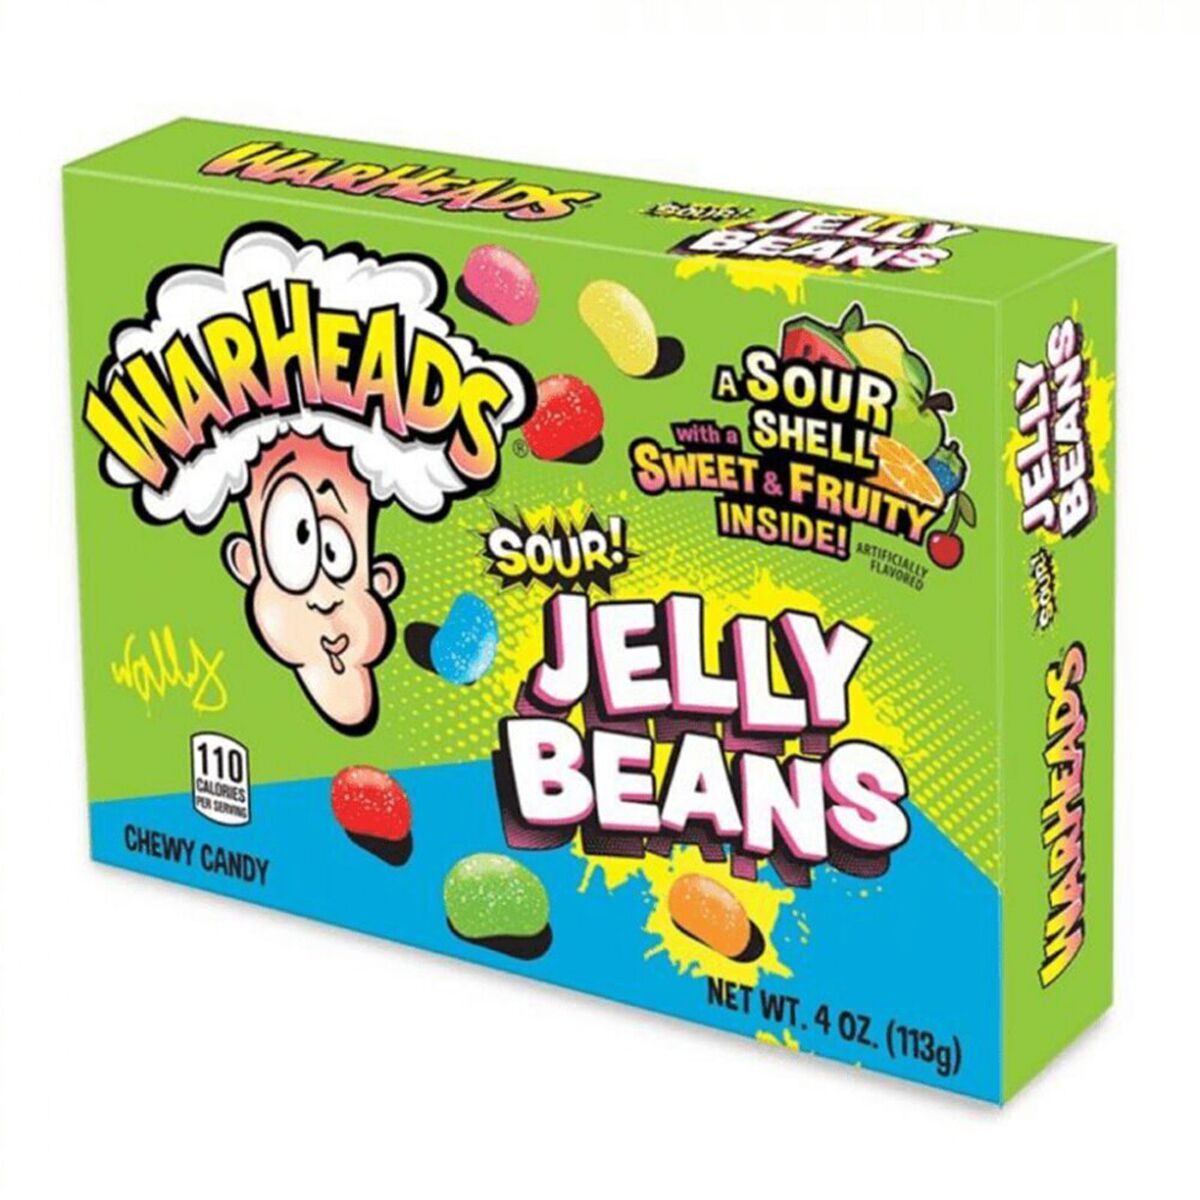 Jelly bean onlyfans. Джелли Бинс конфеты. Warheads Sour Jelly Beans конфеты. Вархедс Джелли Бинс (Warheads Sour Jelly Beans) 113гр. Вархедс Джелли Бинс (Warheads Sour Jelly Beans) 113гр (12) 5017.